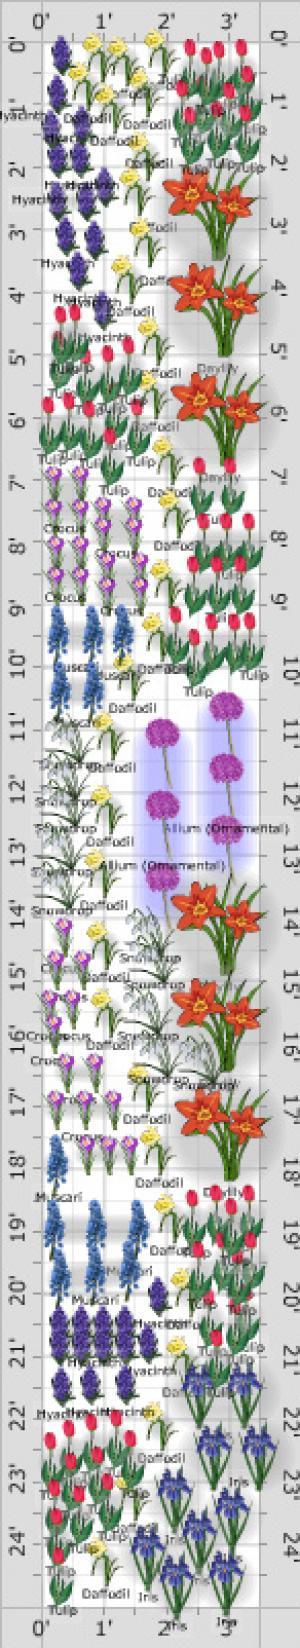 blumengarten-layout-ideen-14_16 Flower garden layout ideas